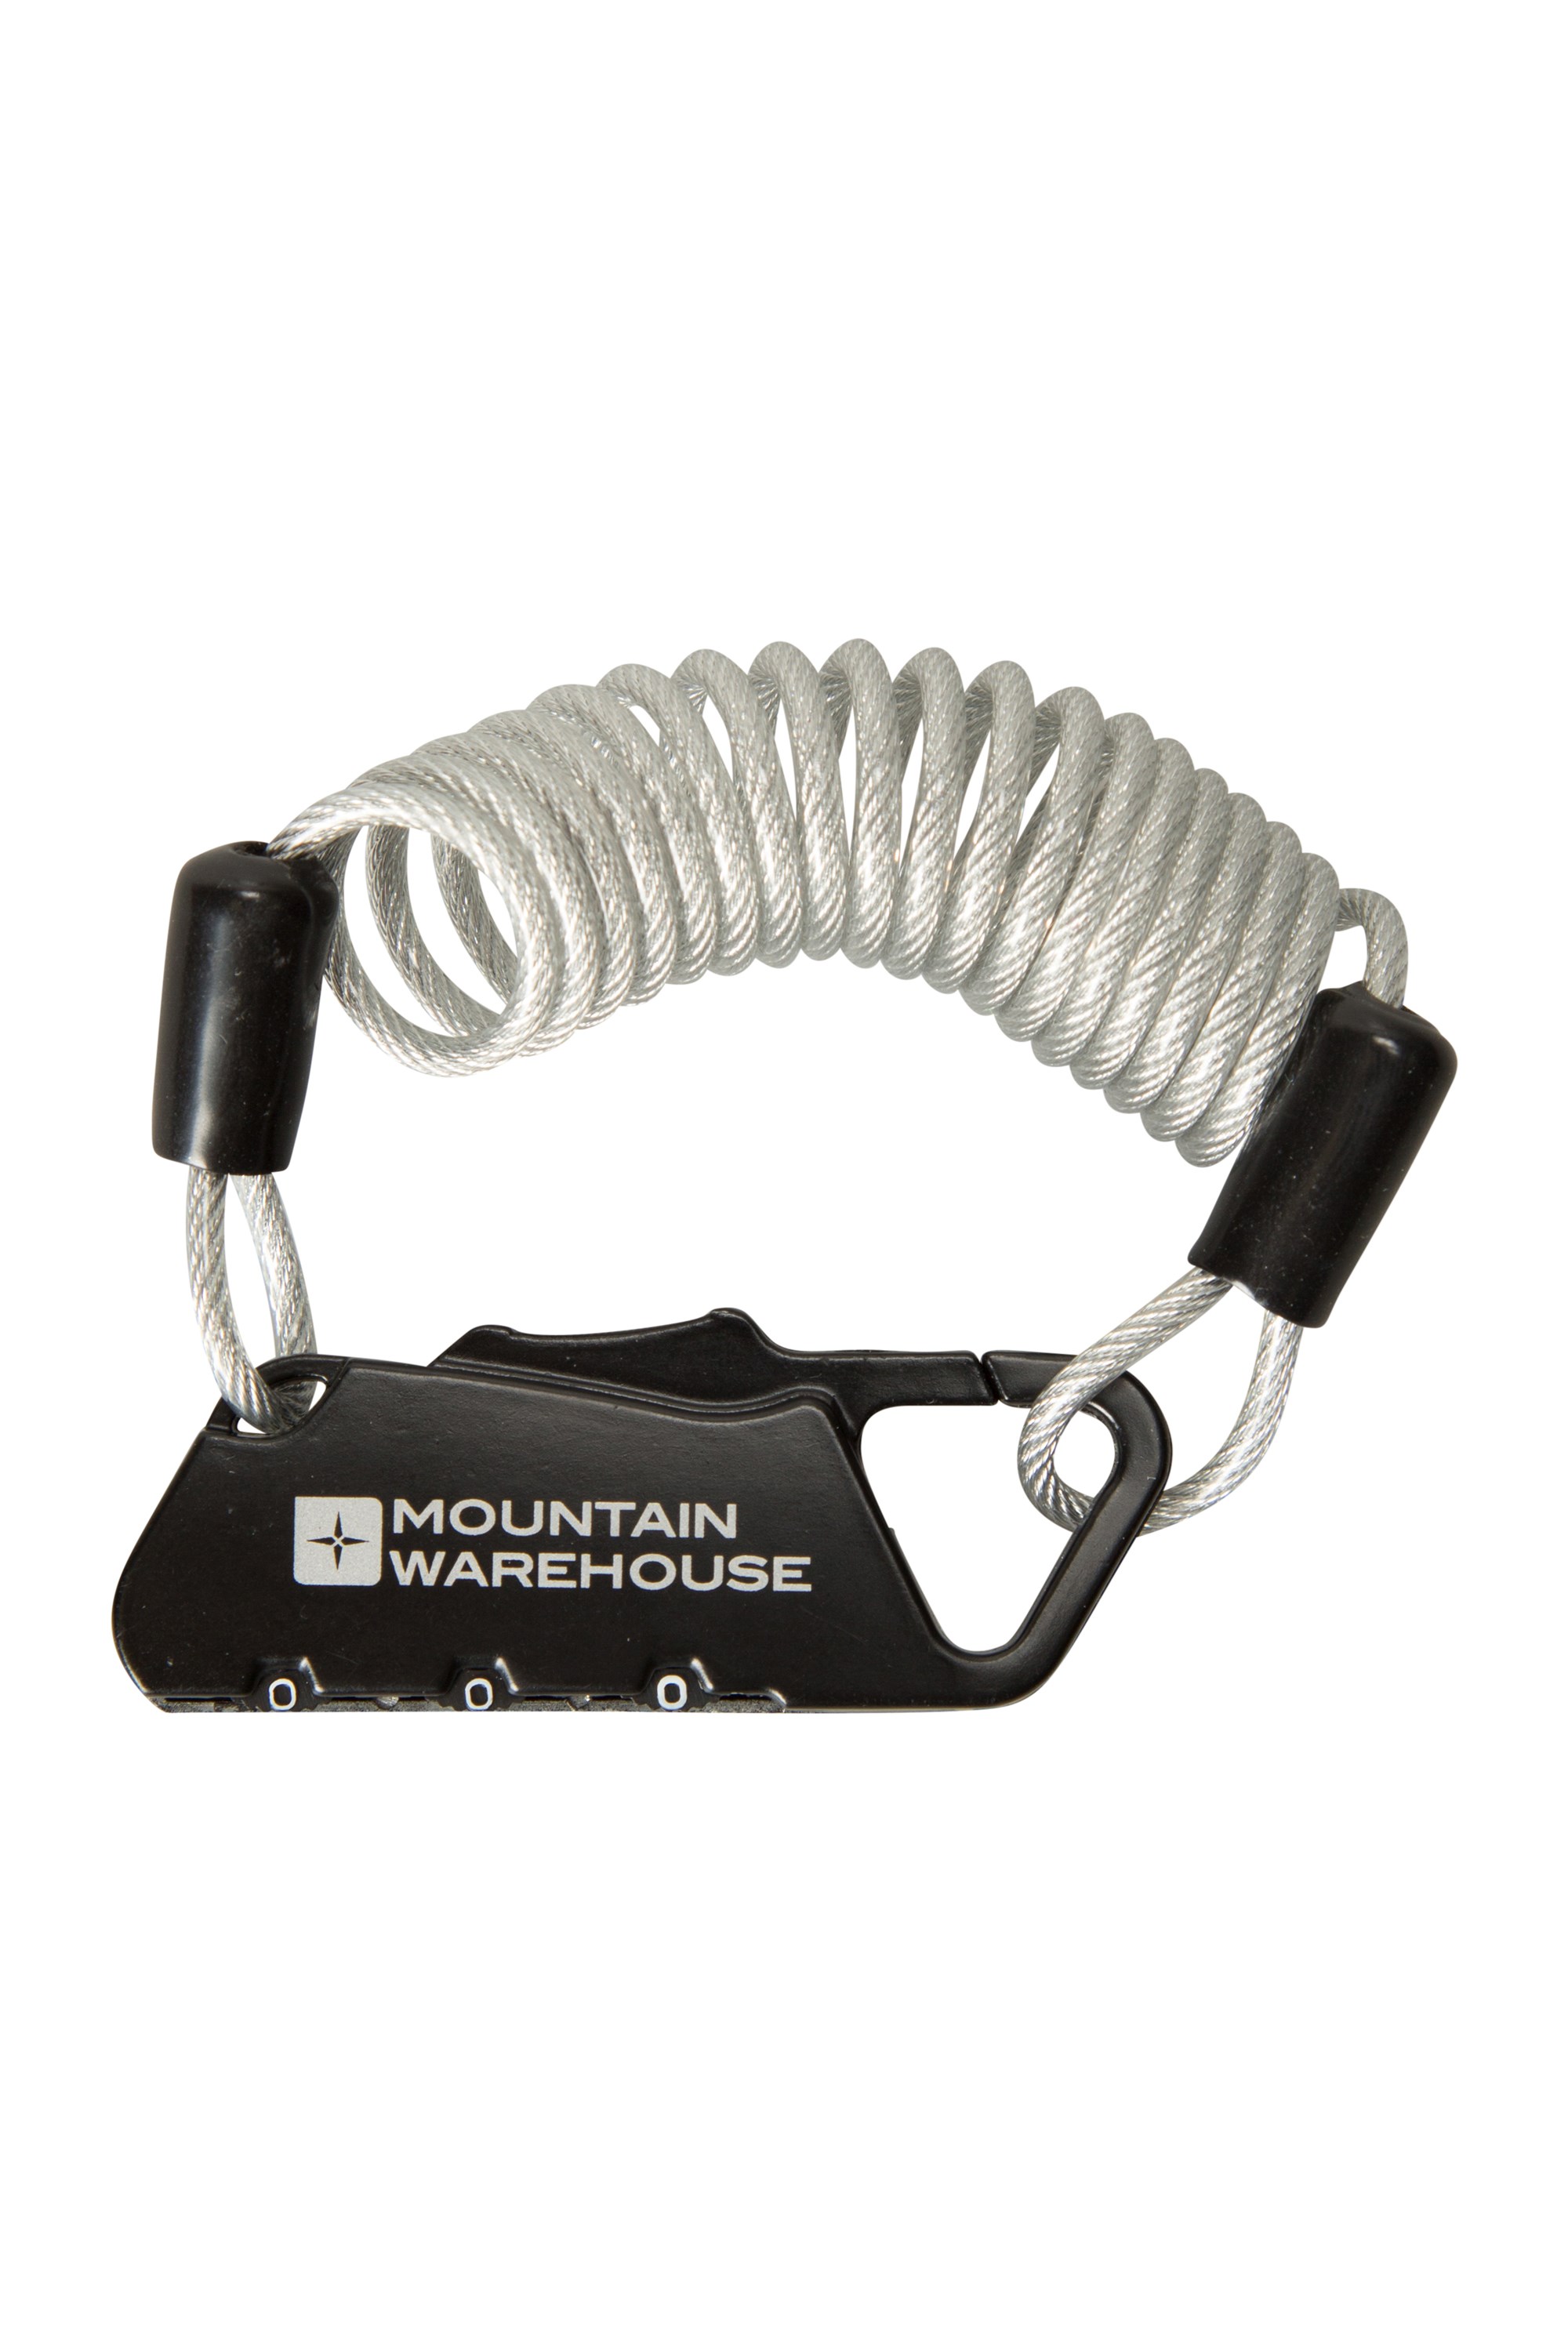 warehouse bike lock